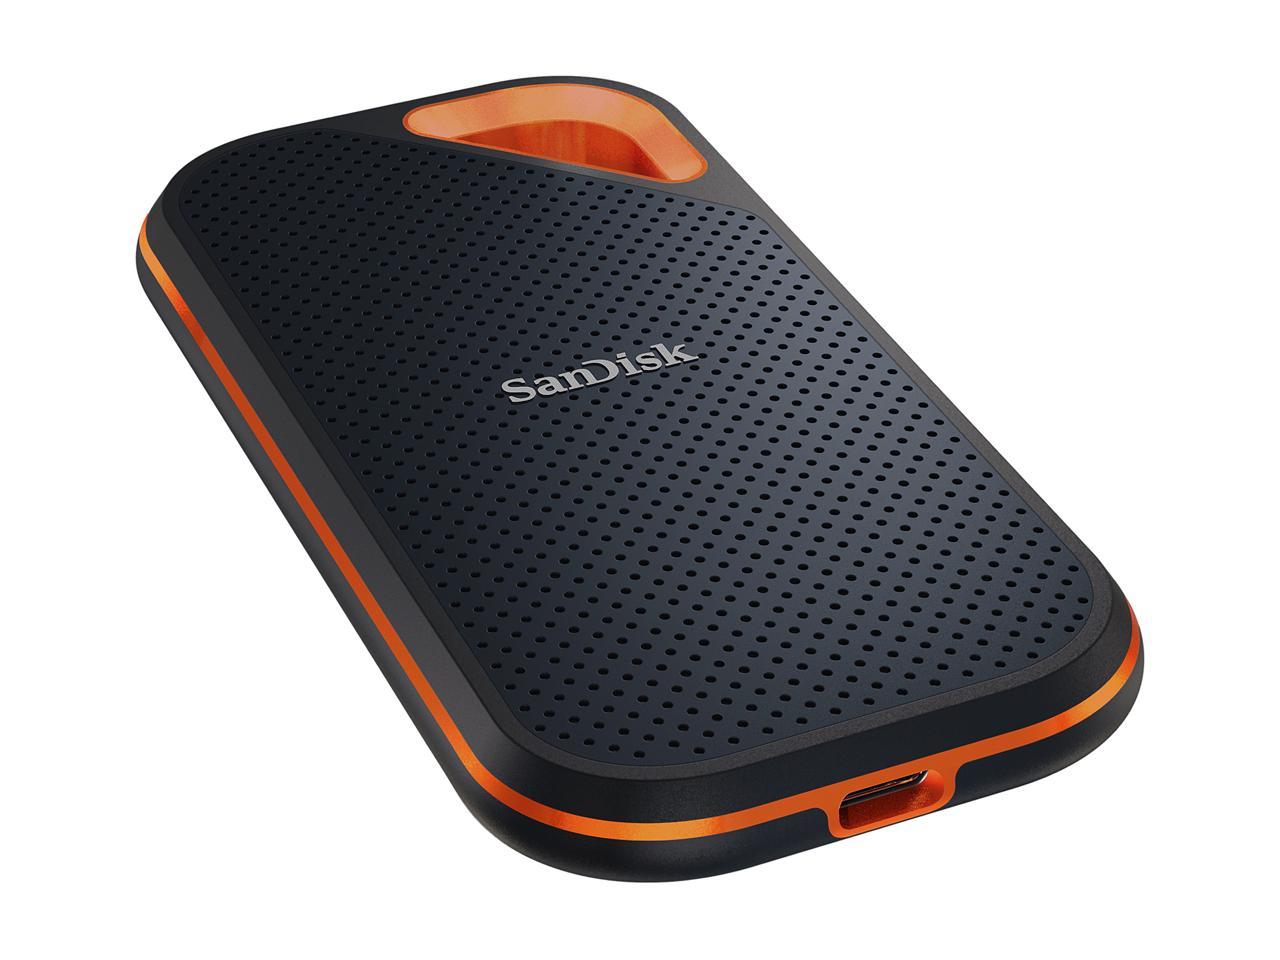 SanDisk 4TB Extreme PRO Portable SSD V2 SDSSDE81-4T00-G25 B&H